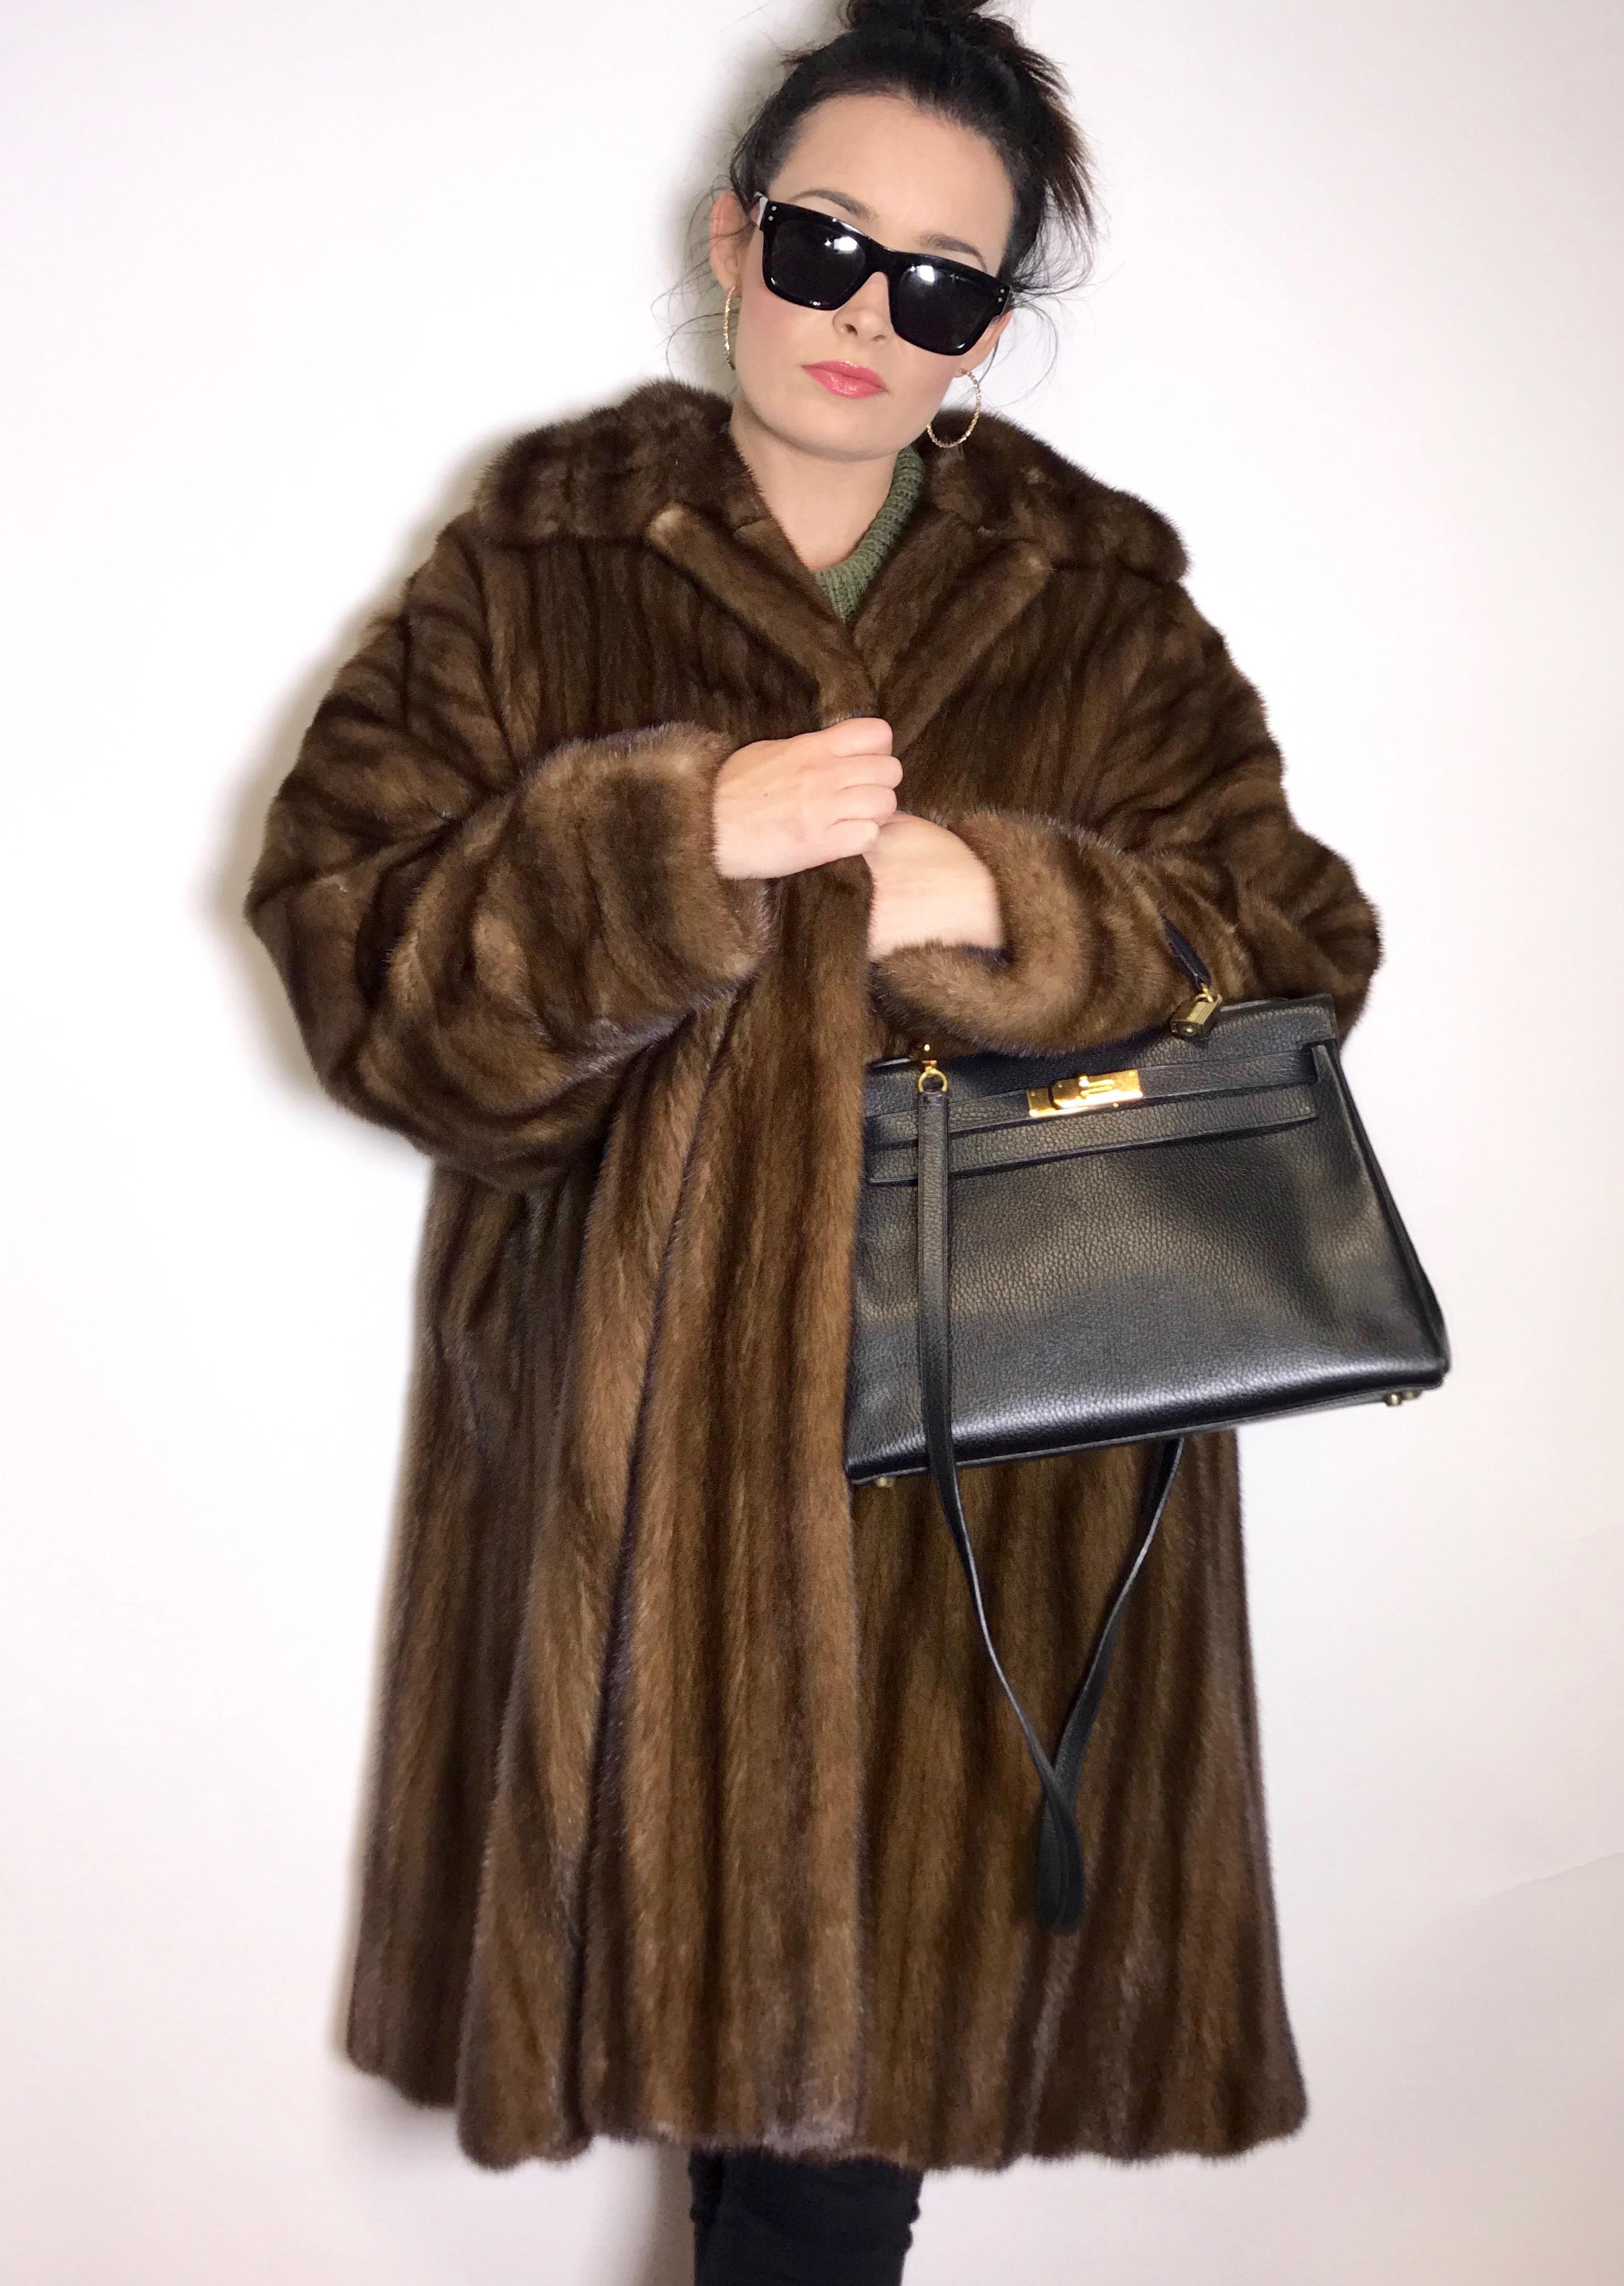 High class velvet mink coat/swinger.
Exclusively made by 